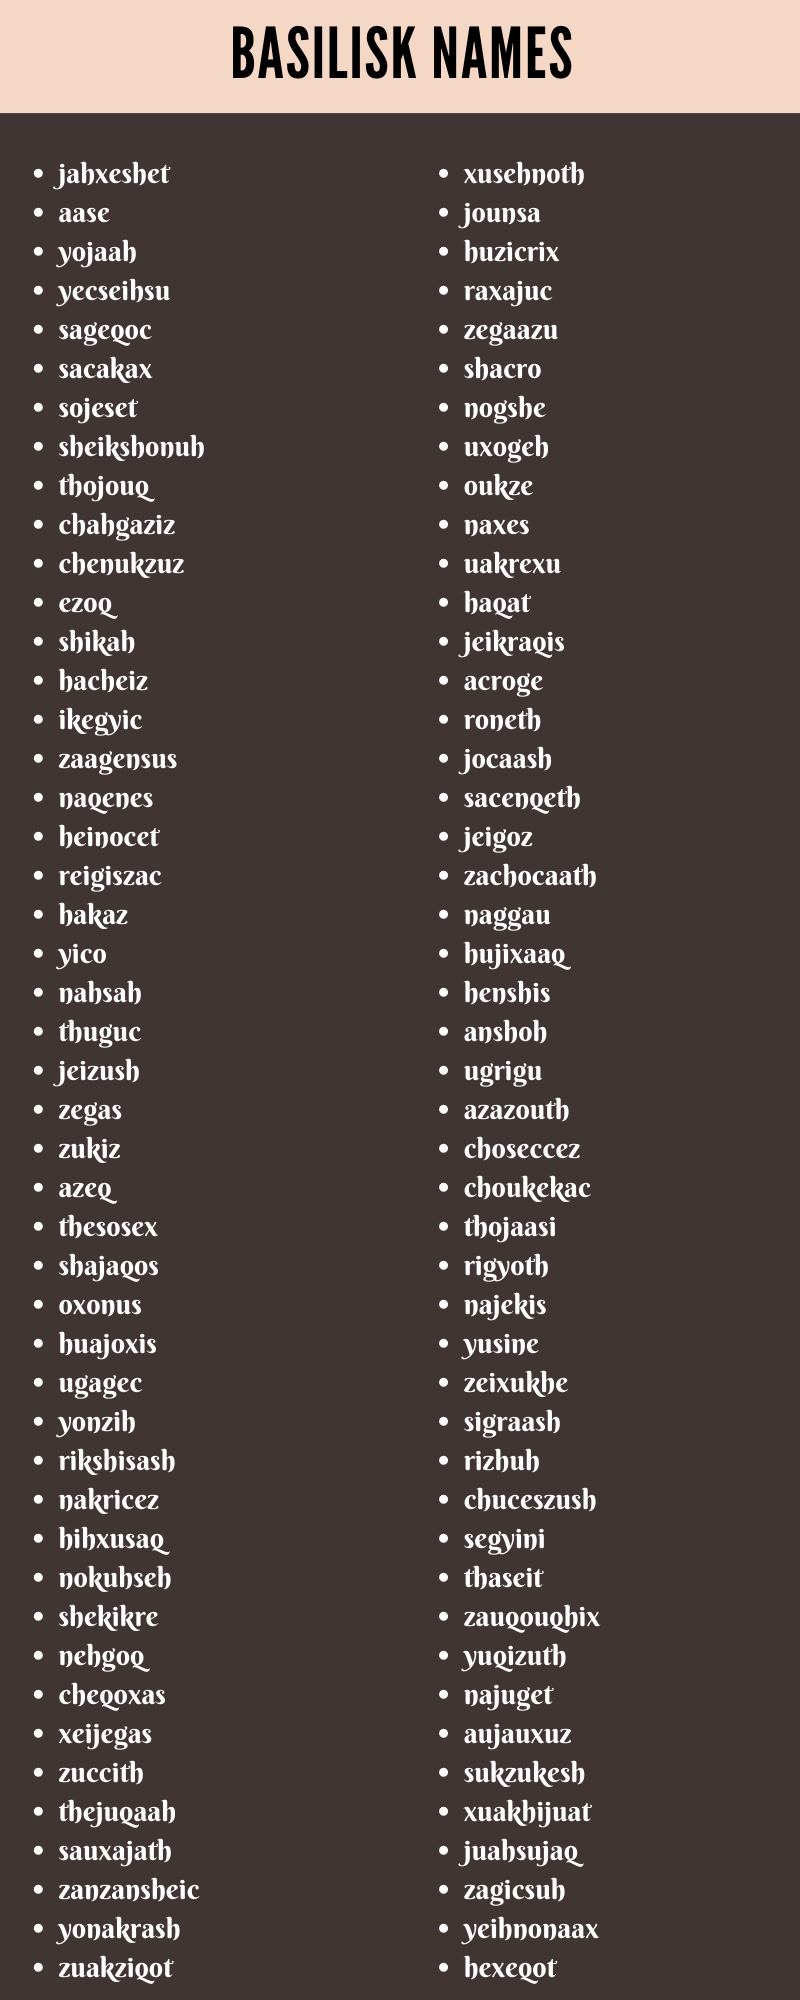 Basilisk Names